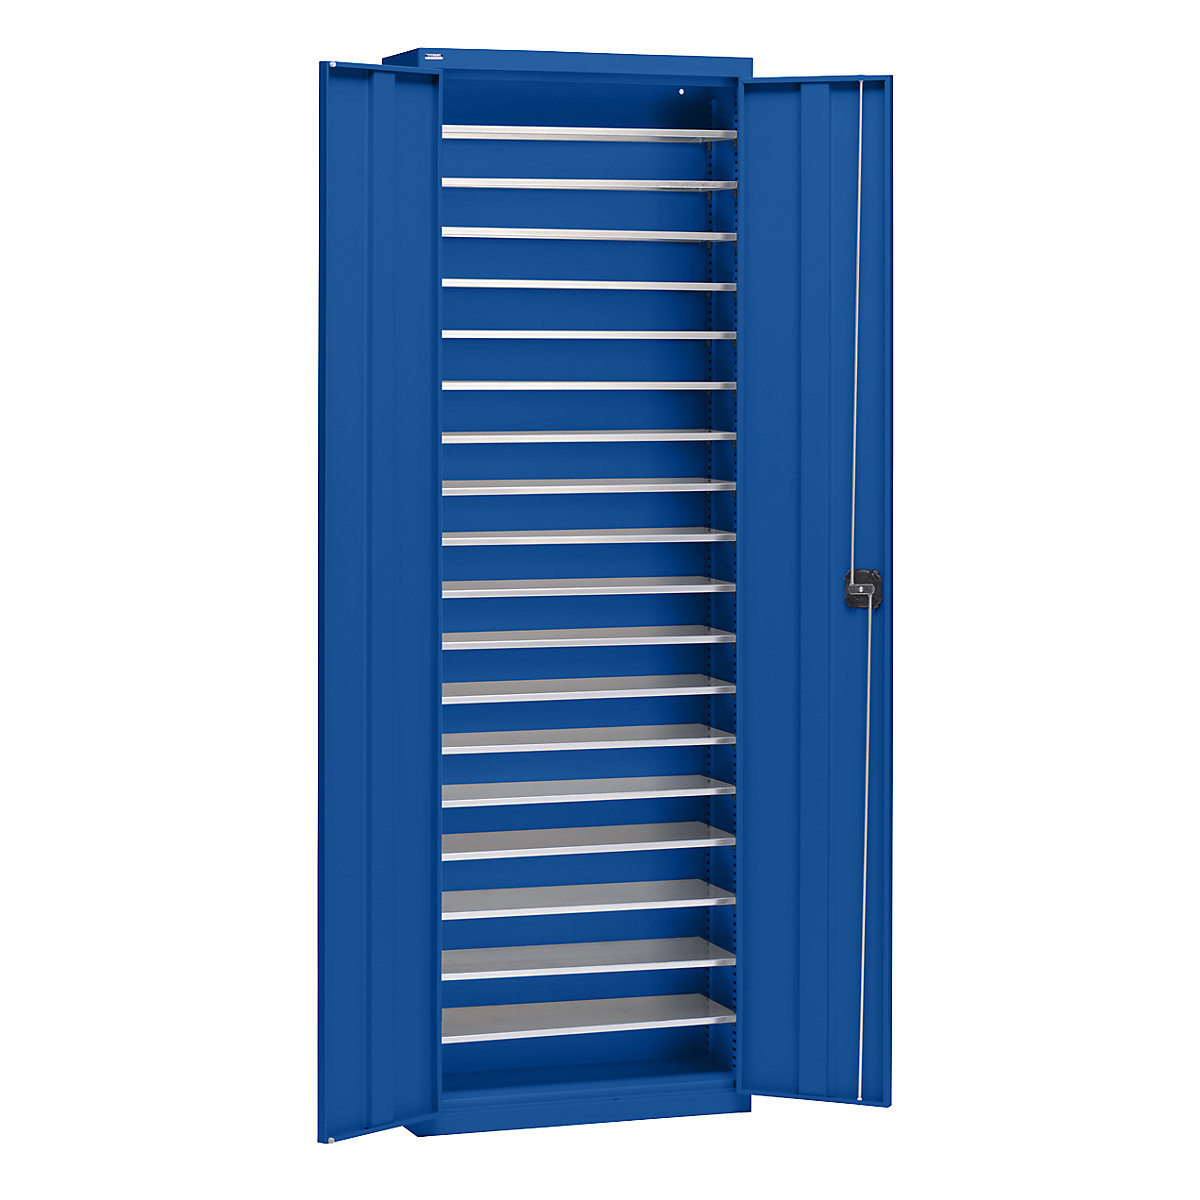 Storage cupboard made of sheet steel – eurokraft pro, height 2000 mm, gentian blue RAL 5010, 18 shelves-10